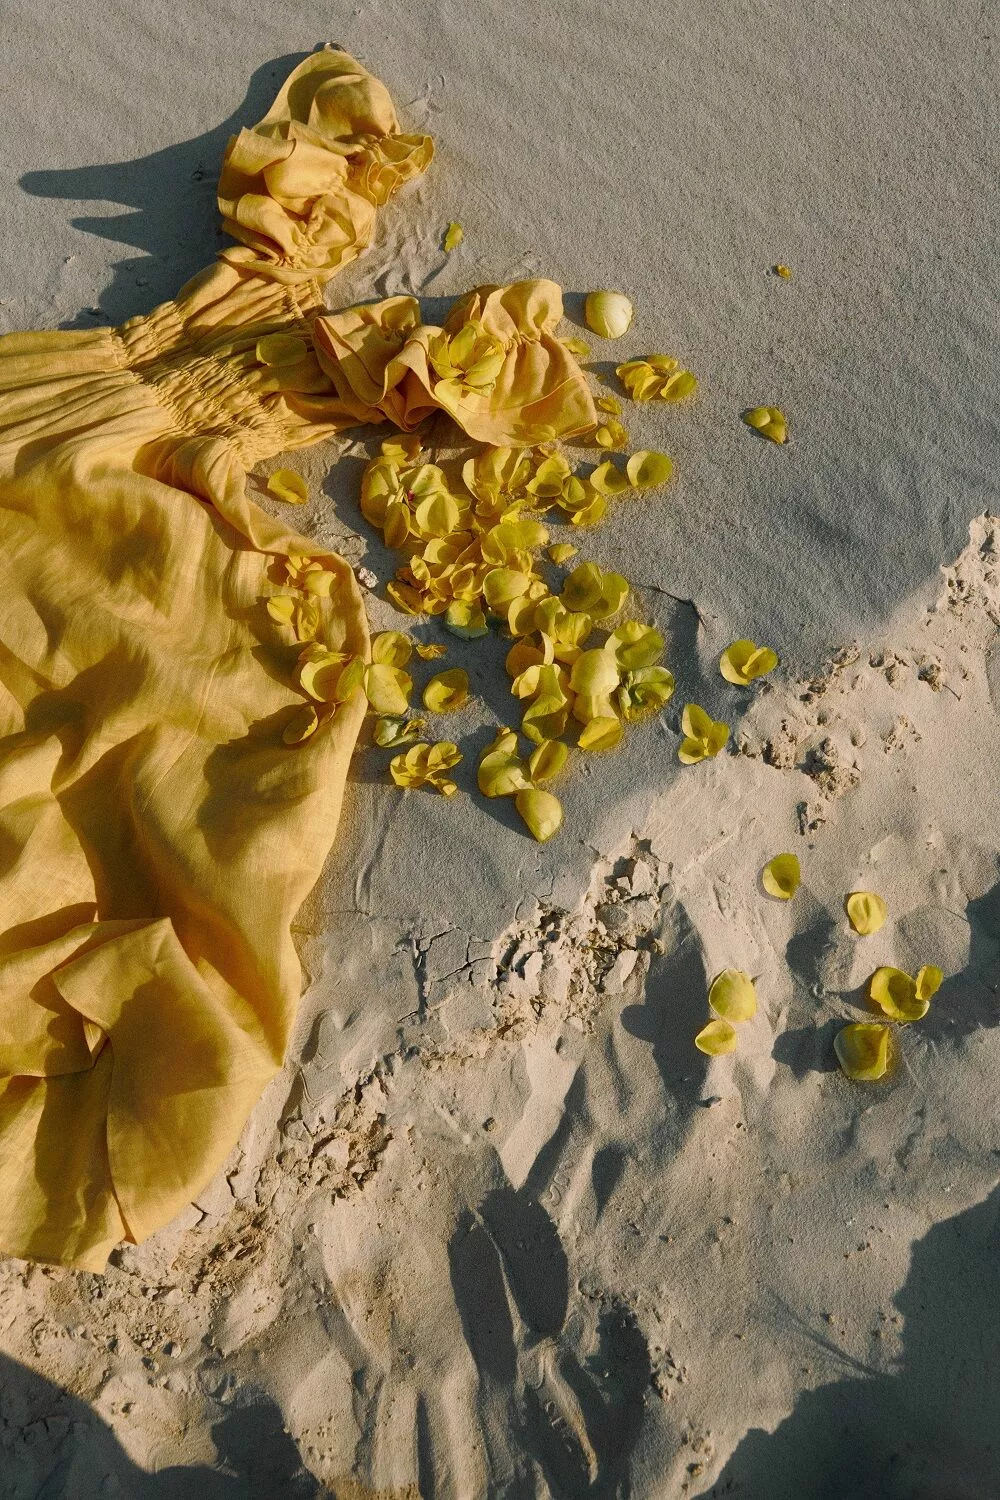 Небо, вода и песок: бренд СHARUEL показал летний лукбук